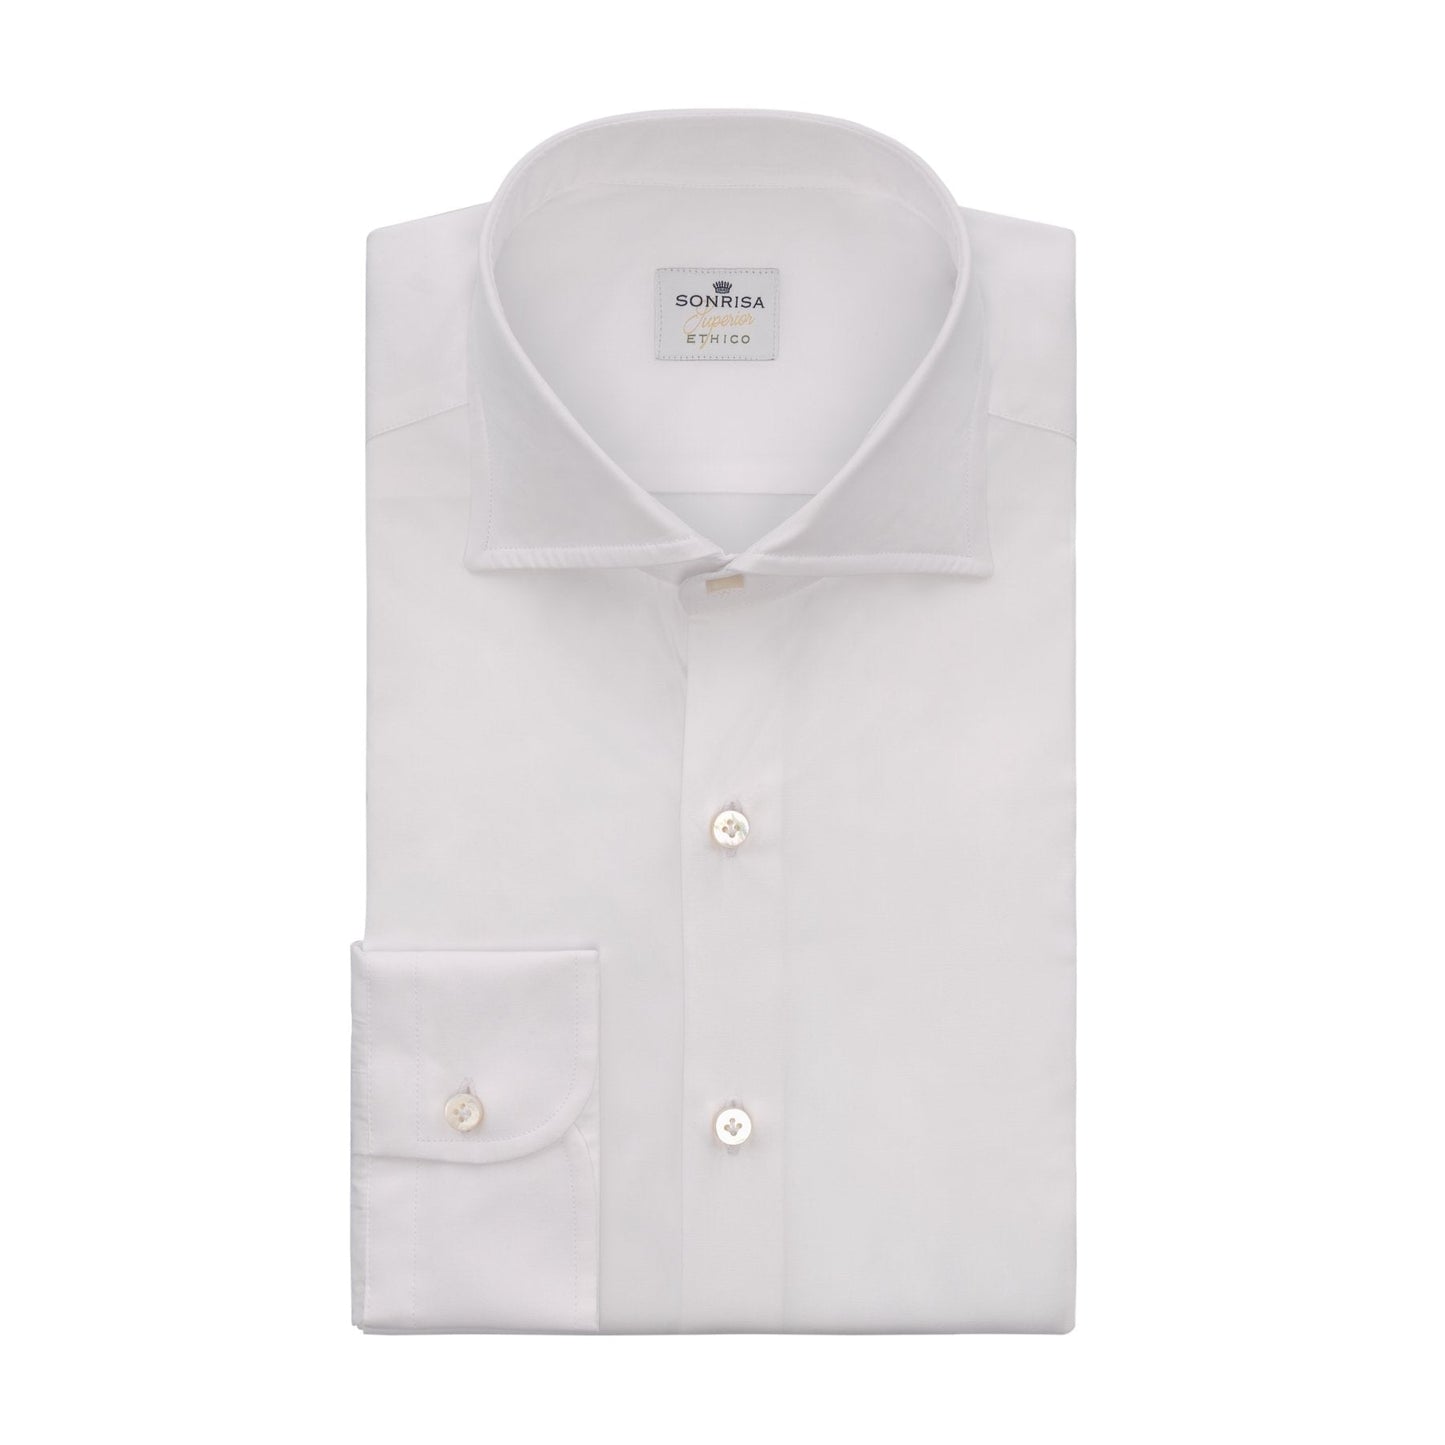 Sonrisa Classic Cotton Shirt in White - SARTALE